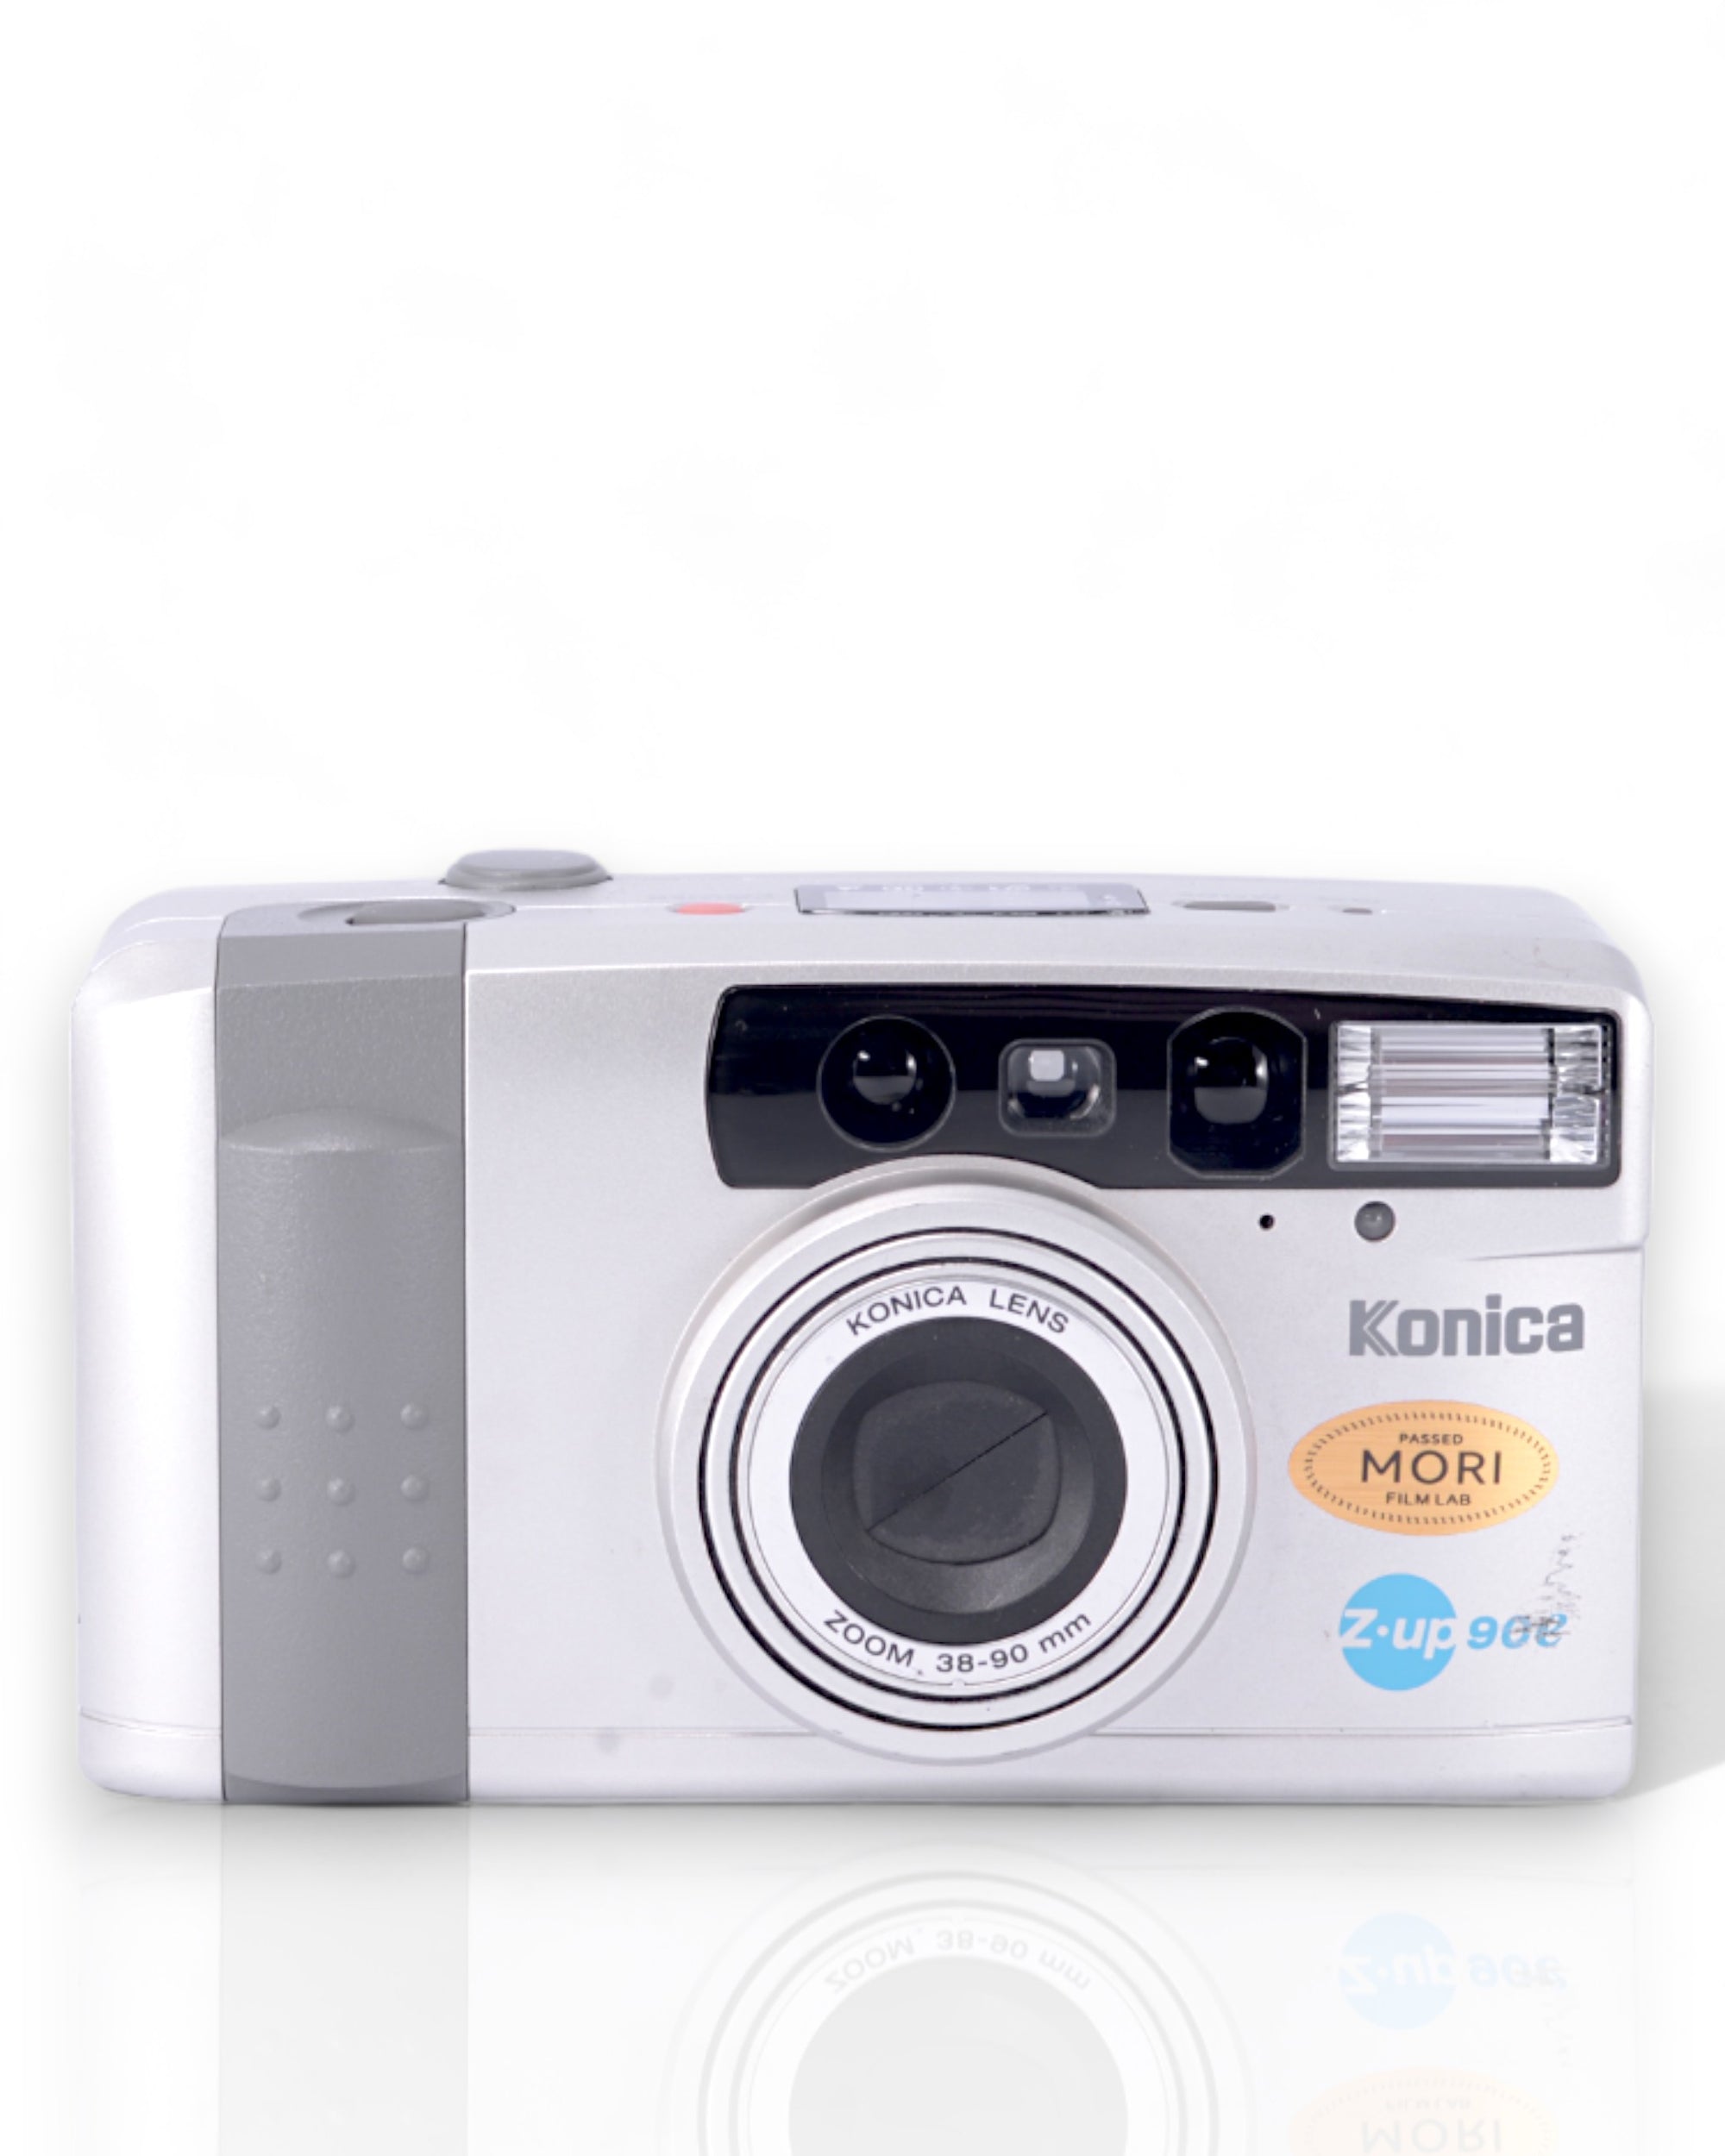 Konica Z-up 90e Zoom Point & Shoot 35mm argentique avec zoom 38-90mm objectif